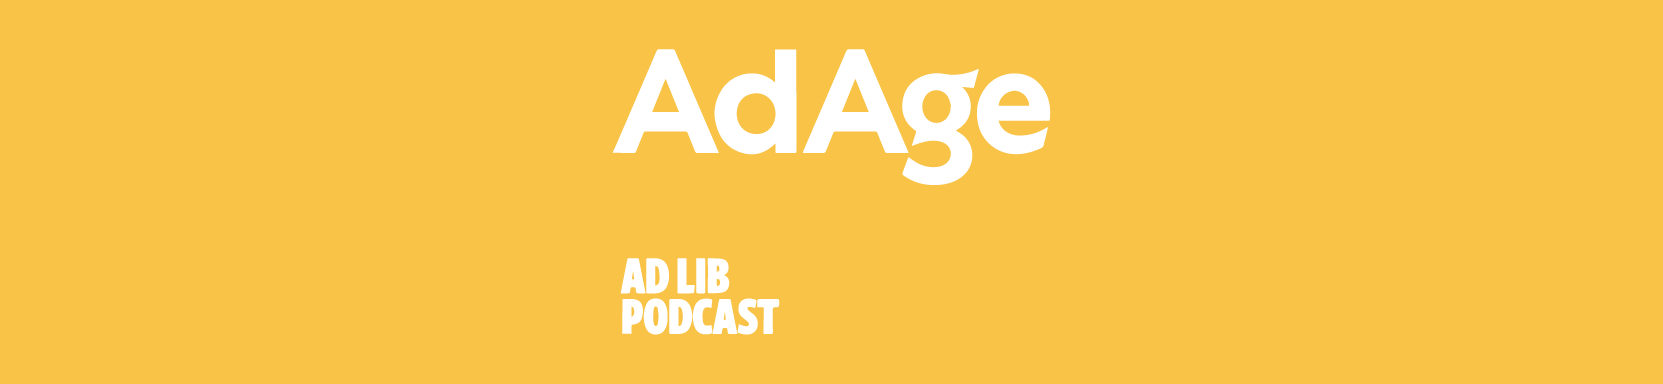 AdAge AdLab Podcast